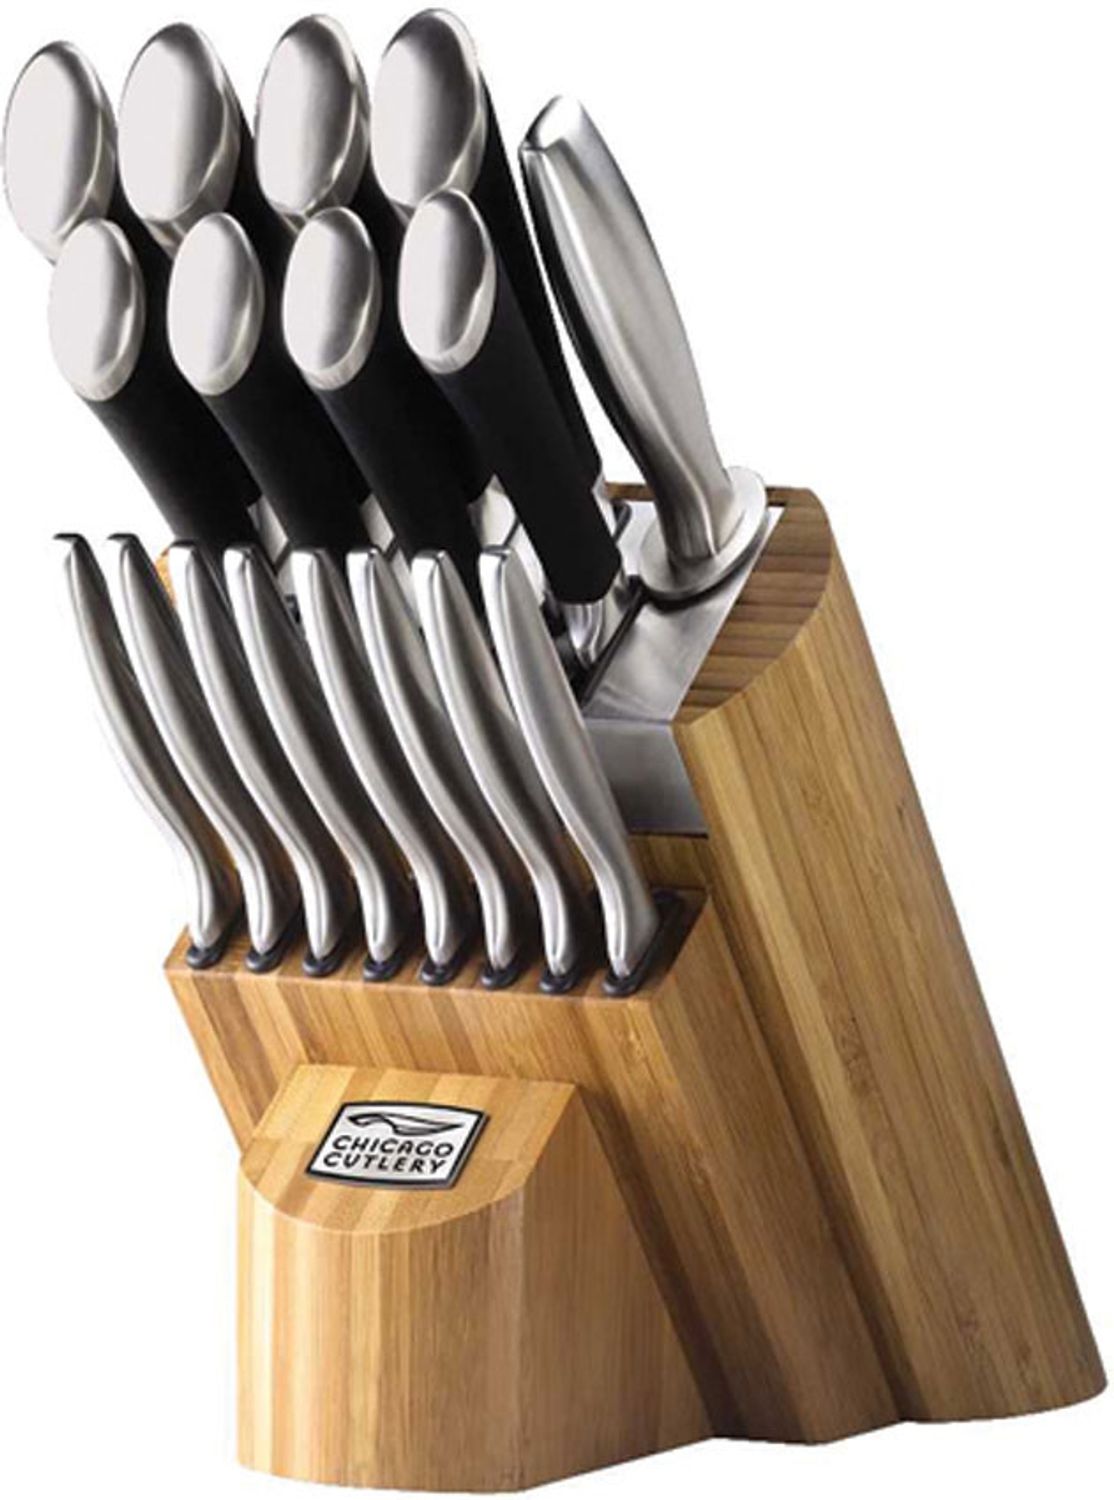 Chicago Cutlery Fusion 18-Piece Cutlery Set - Macy's